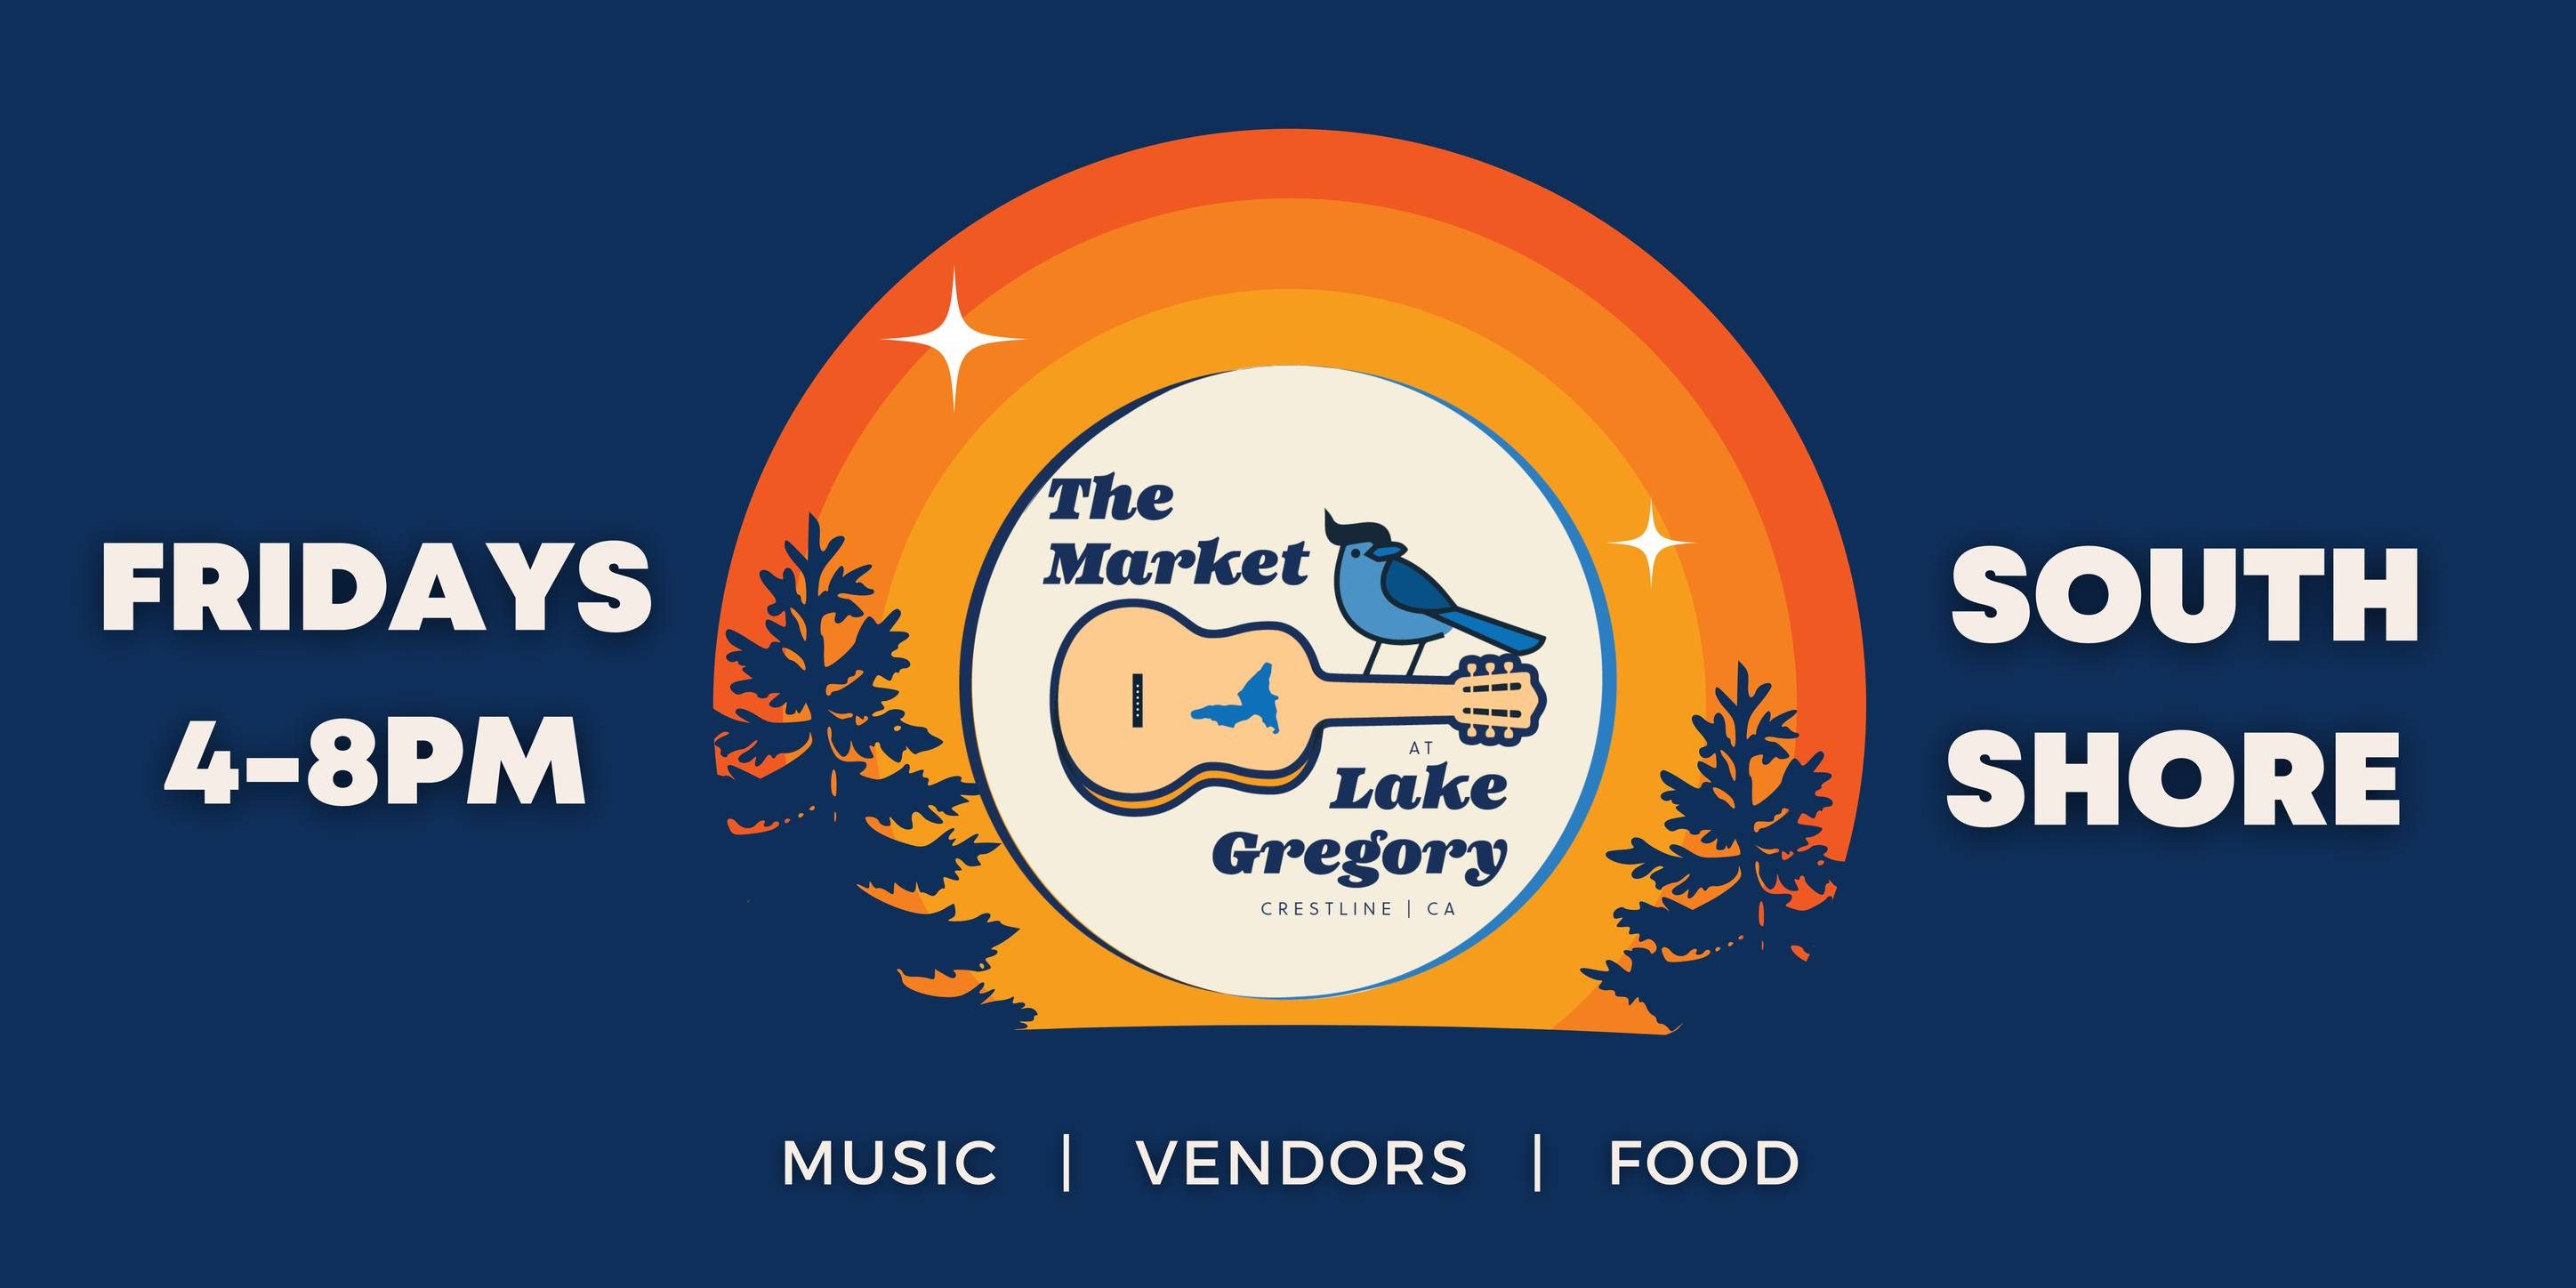 The Market @ Lake Gregory - your Crestline Farmers' Market